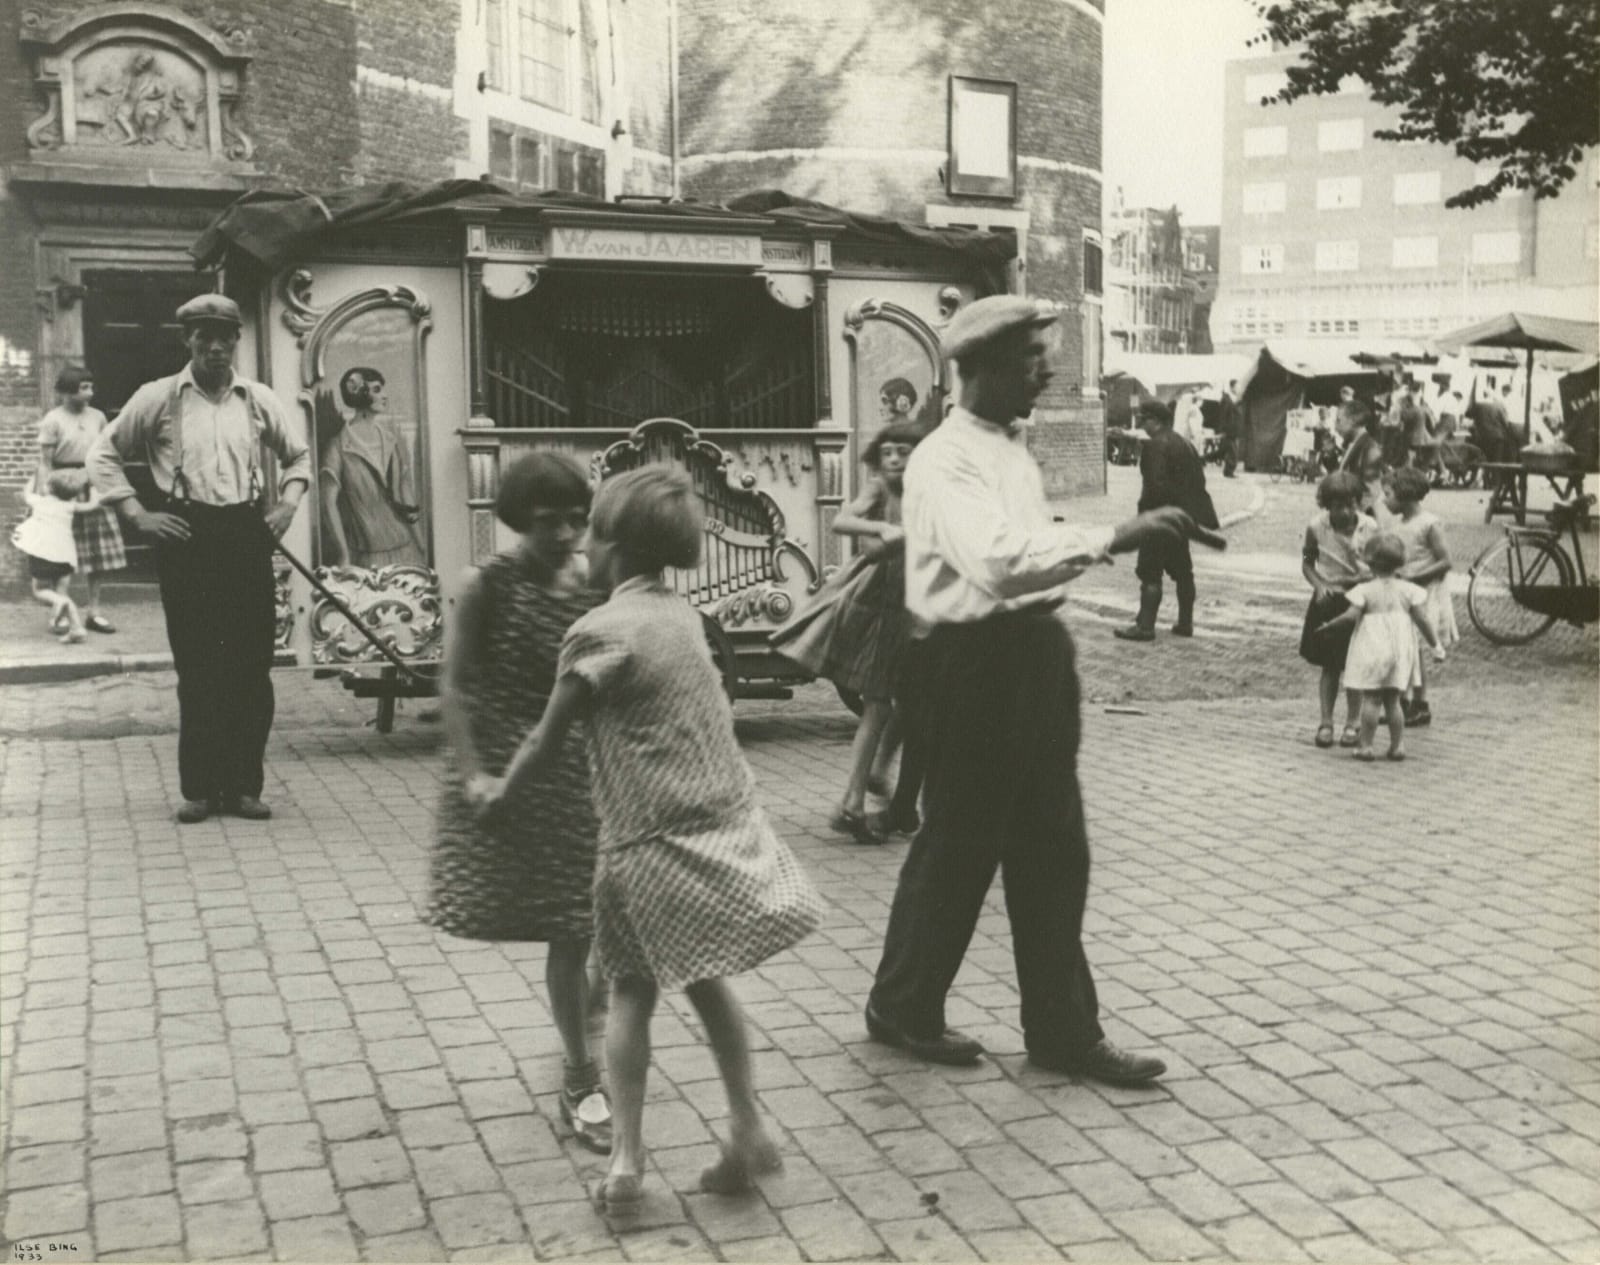 Ilse Bing photograph of girls dancing outside street organ in Amsterdam